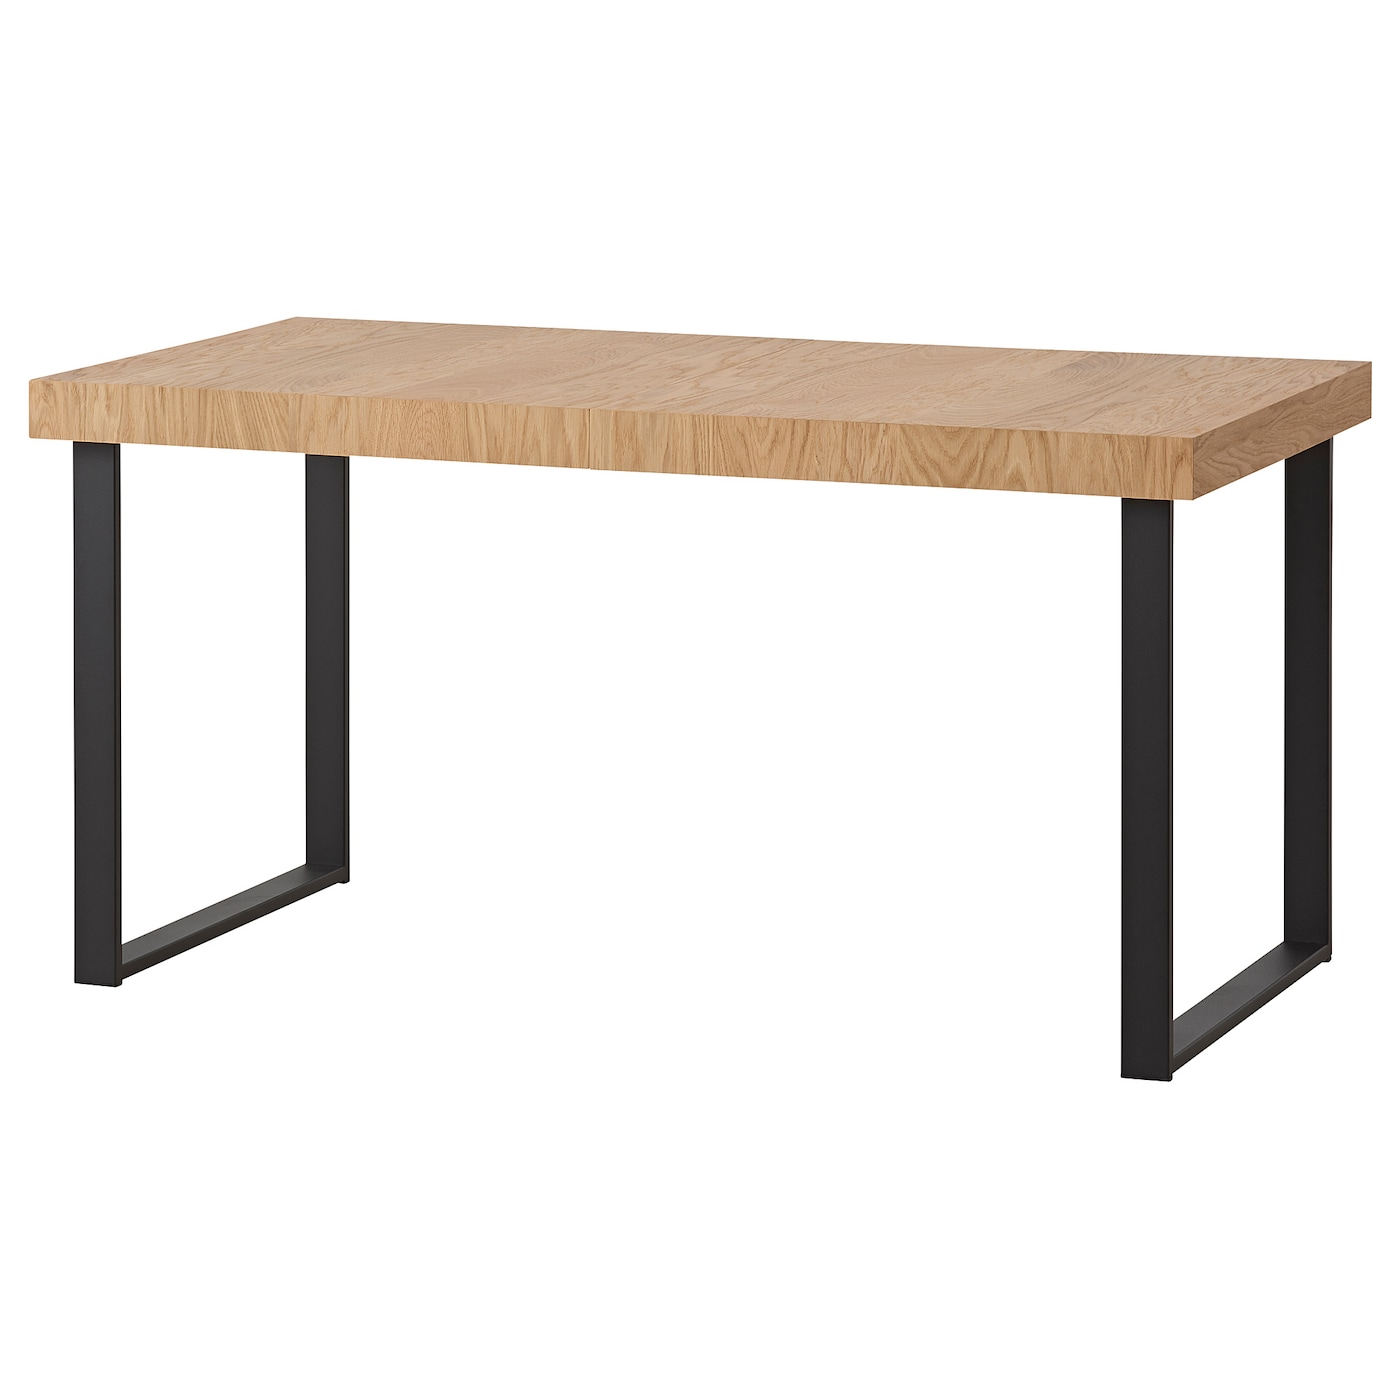 Раздвижной стол - IKEA TARSELE, 150х80х77 см, дубовый шпон/черный, ТАРСЕЛЬ ИКЕА